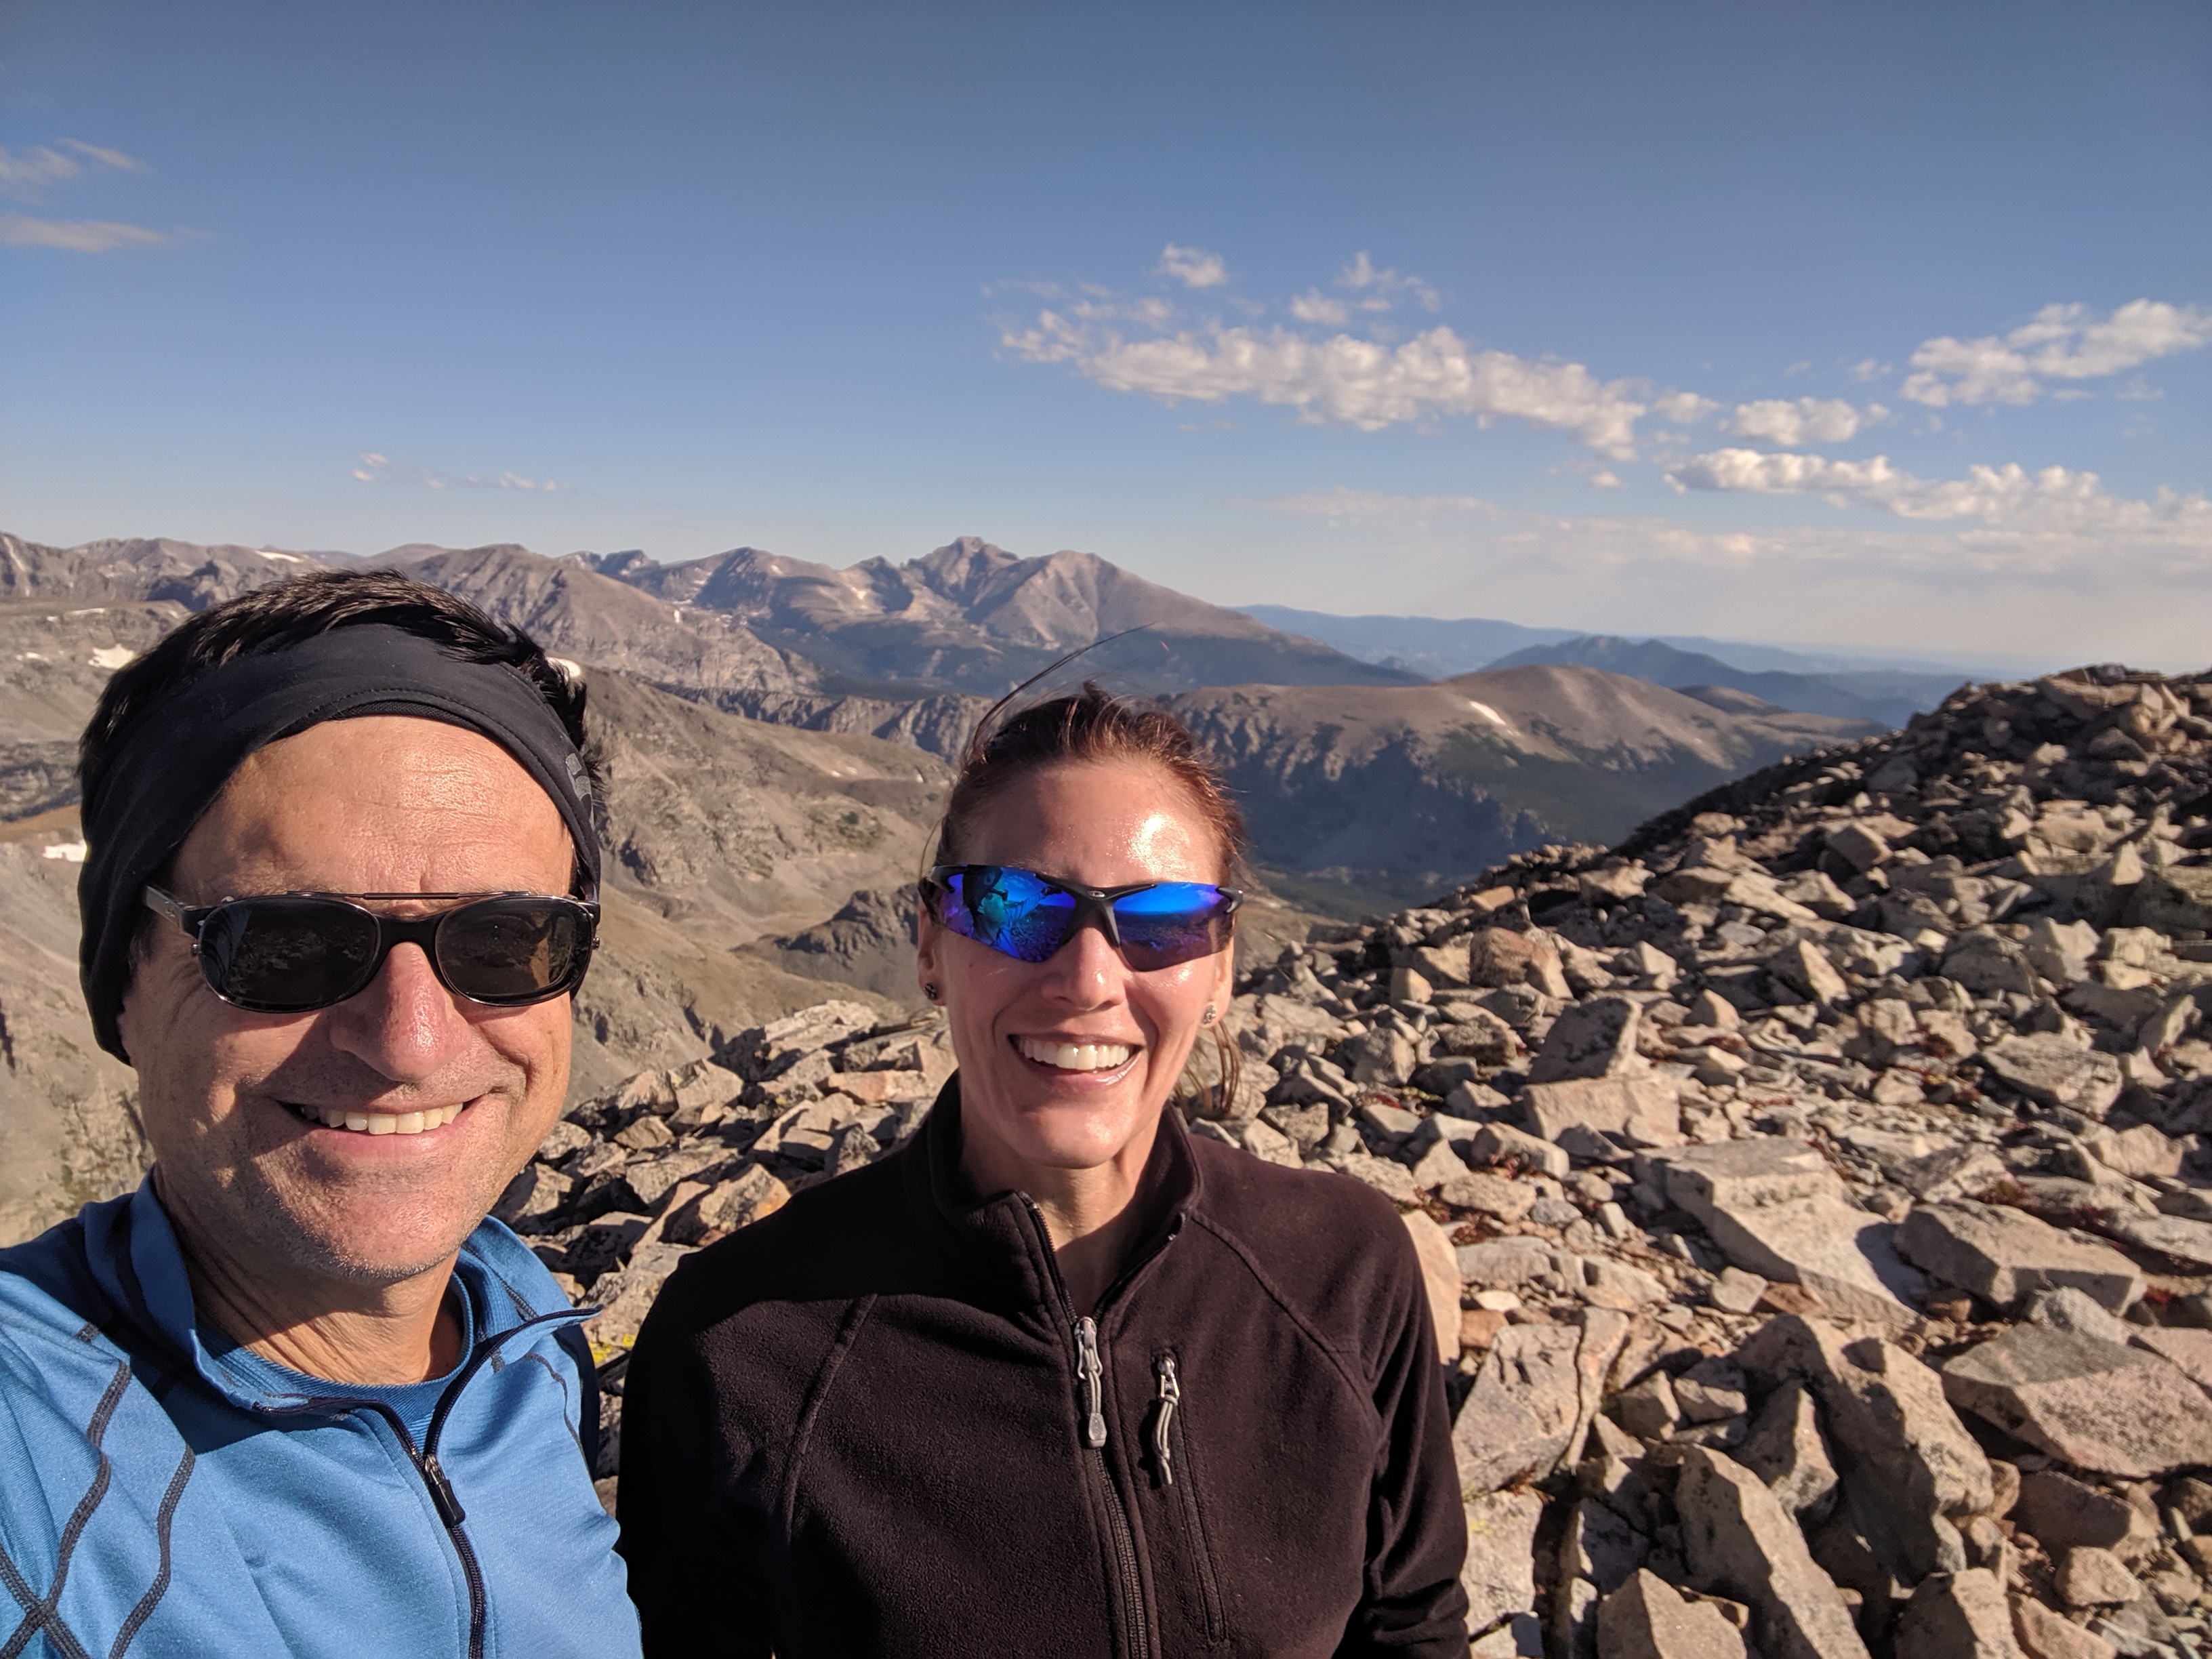 More Colorado Hiking – Mt. Audubon, Mt. Flora, and more